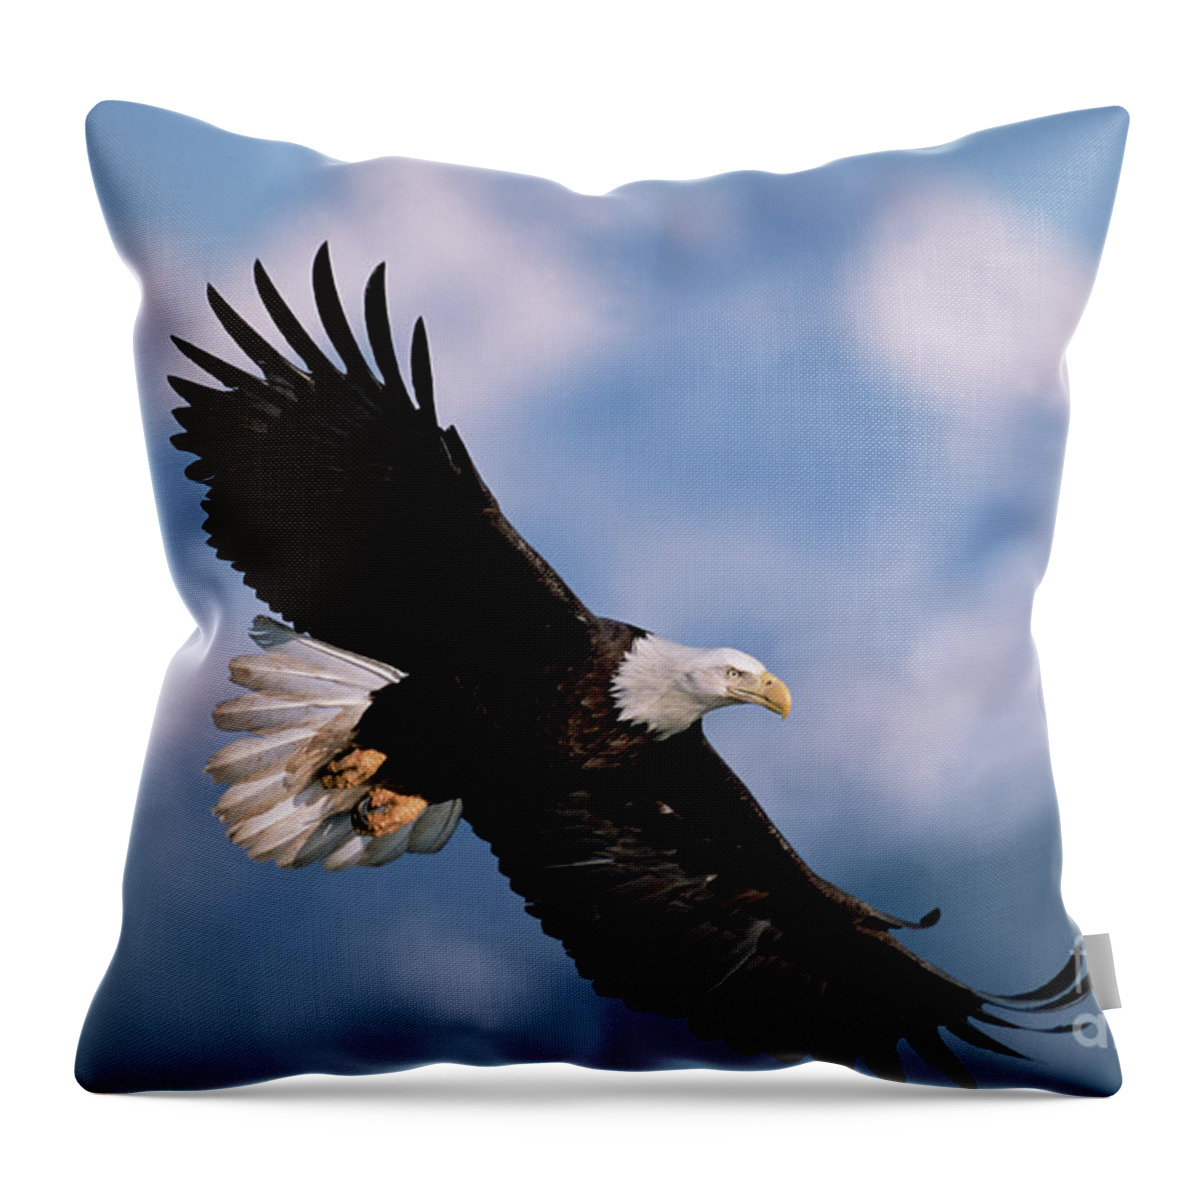 00343849 Throw Pillow featuring the photograph Bald Eagle Flying, Kachemak Bay by Yva Momatiuk John Eastcott